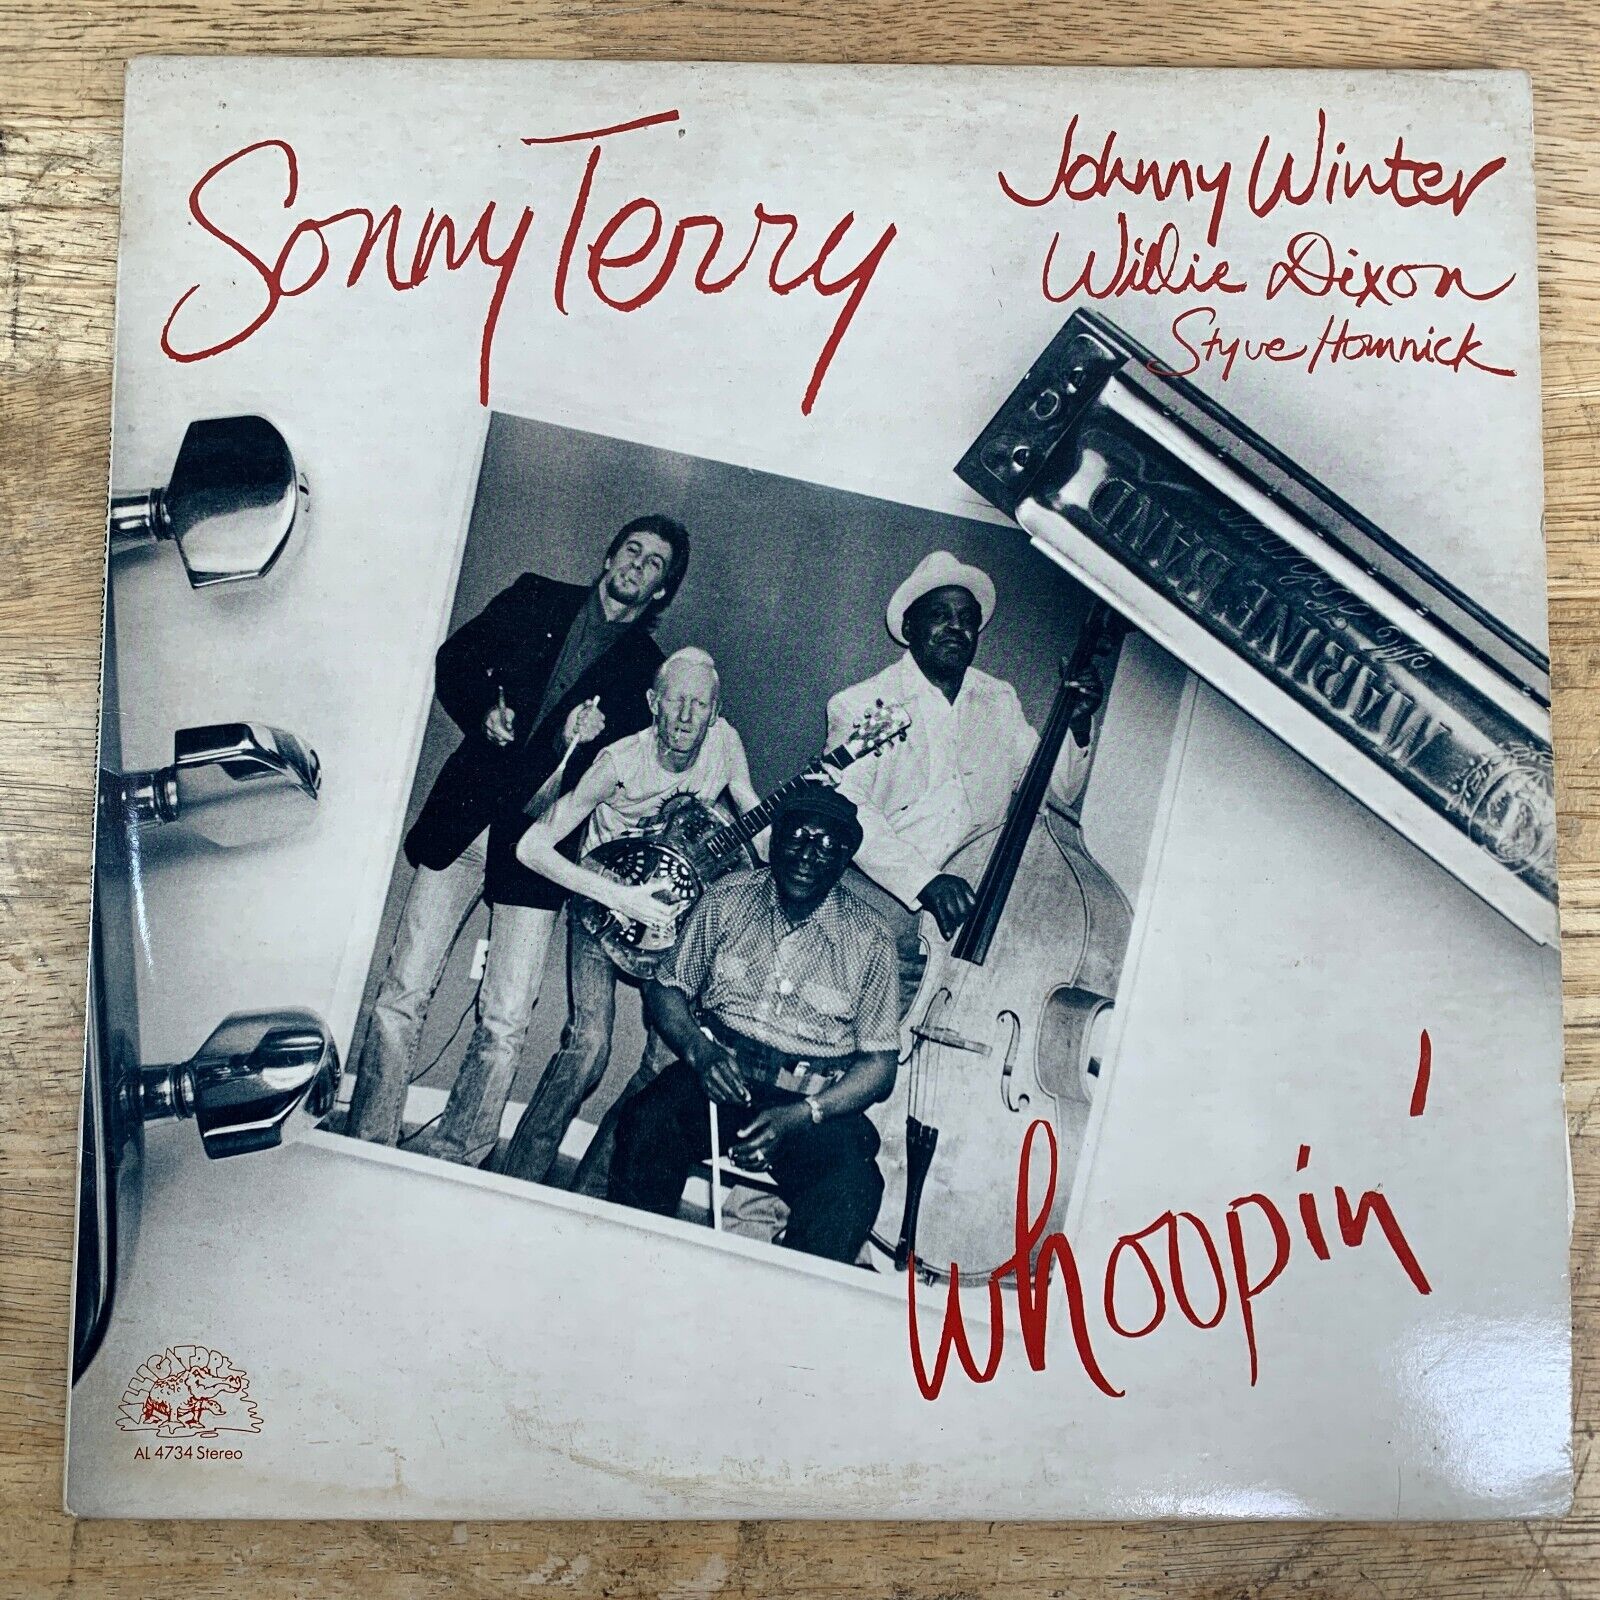 Sonny Terry Whoopin LP Vinyl Record Album 1984 Alligator AL 4734 Johnny Winter